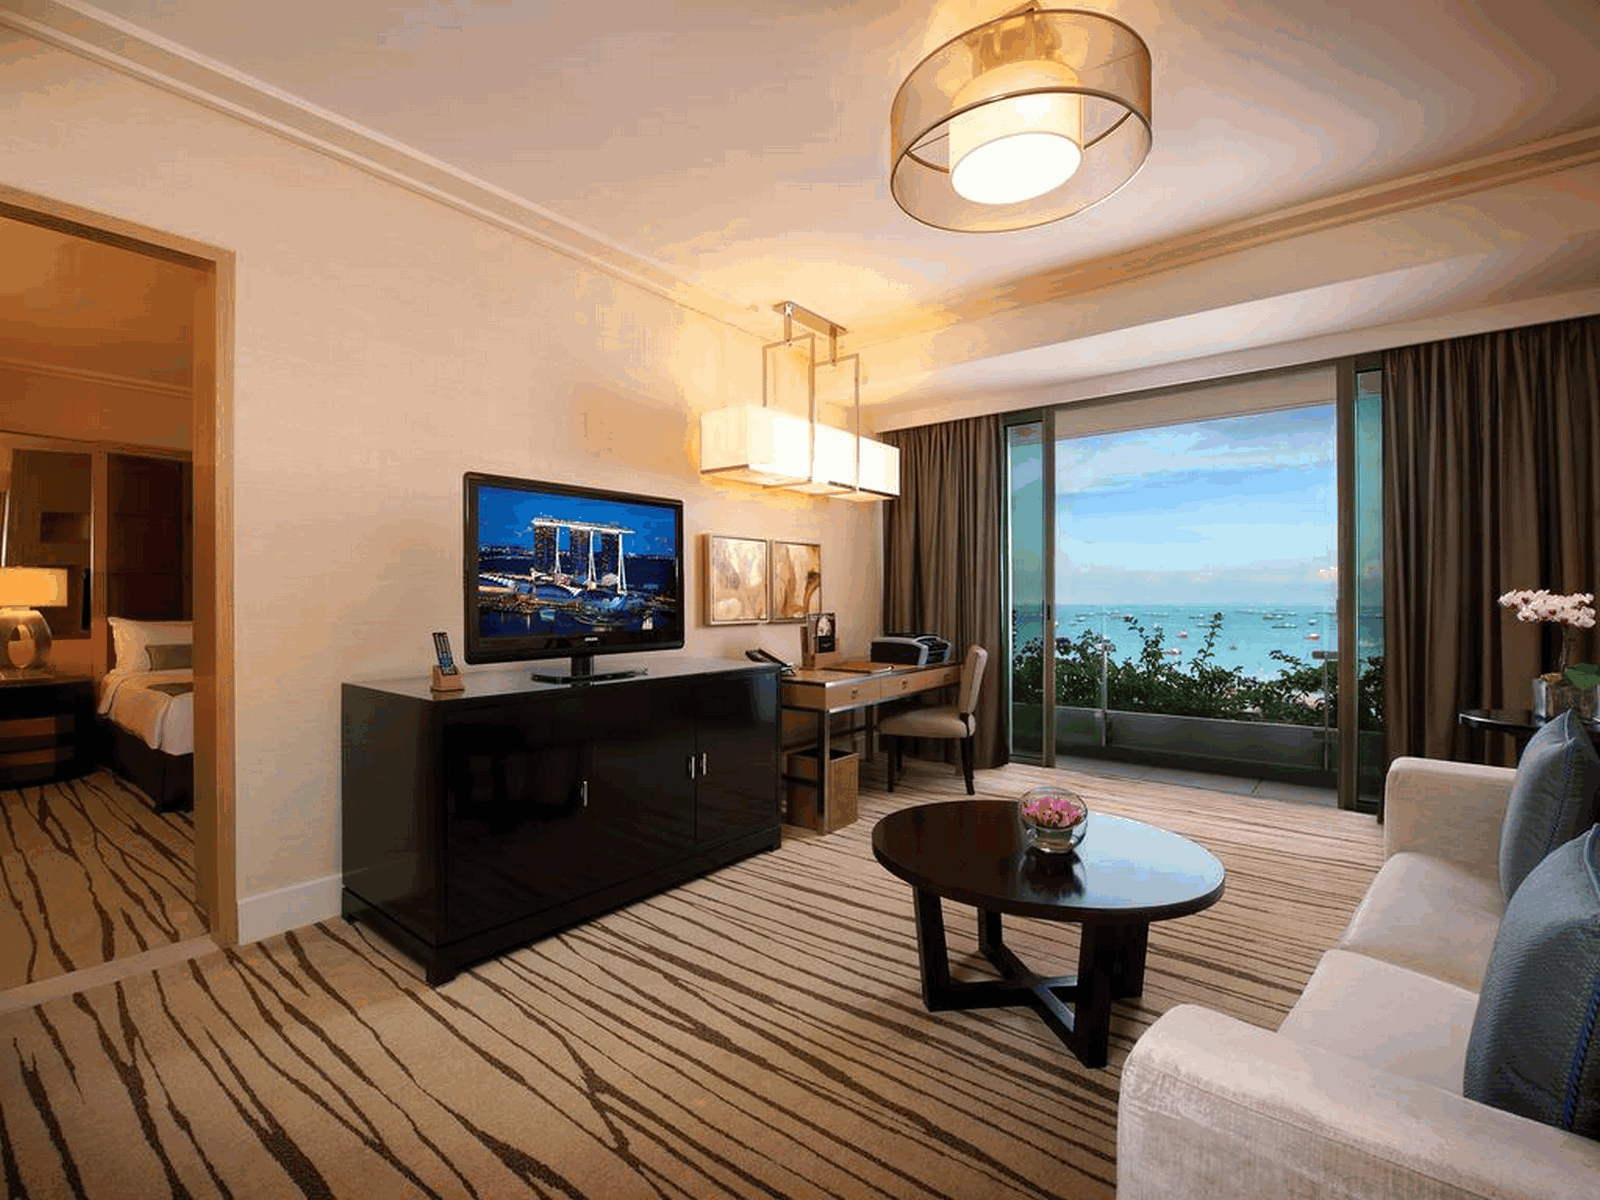 Marina Bay Sands hotels and resort Singapore 20